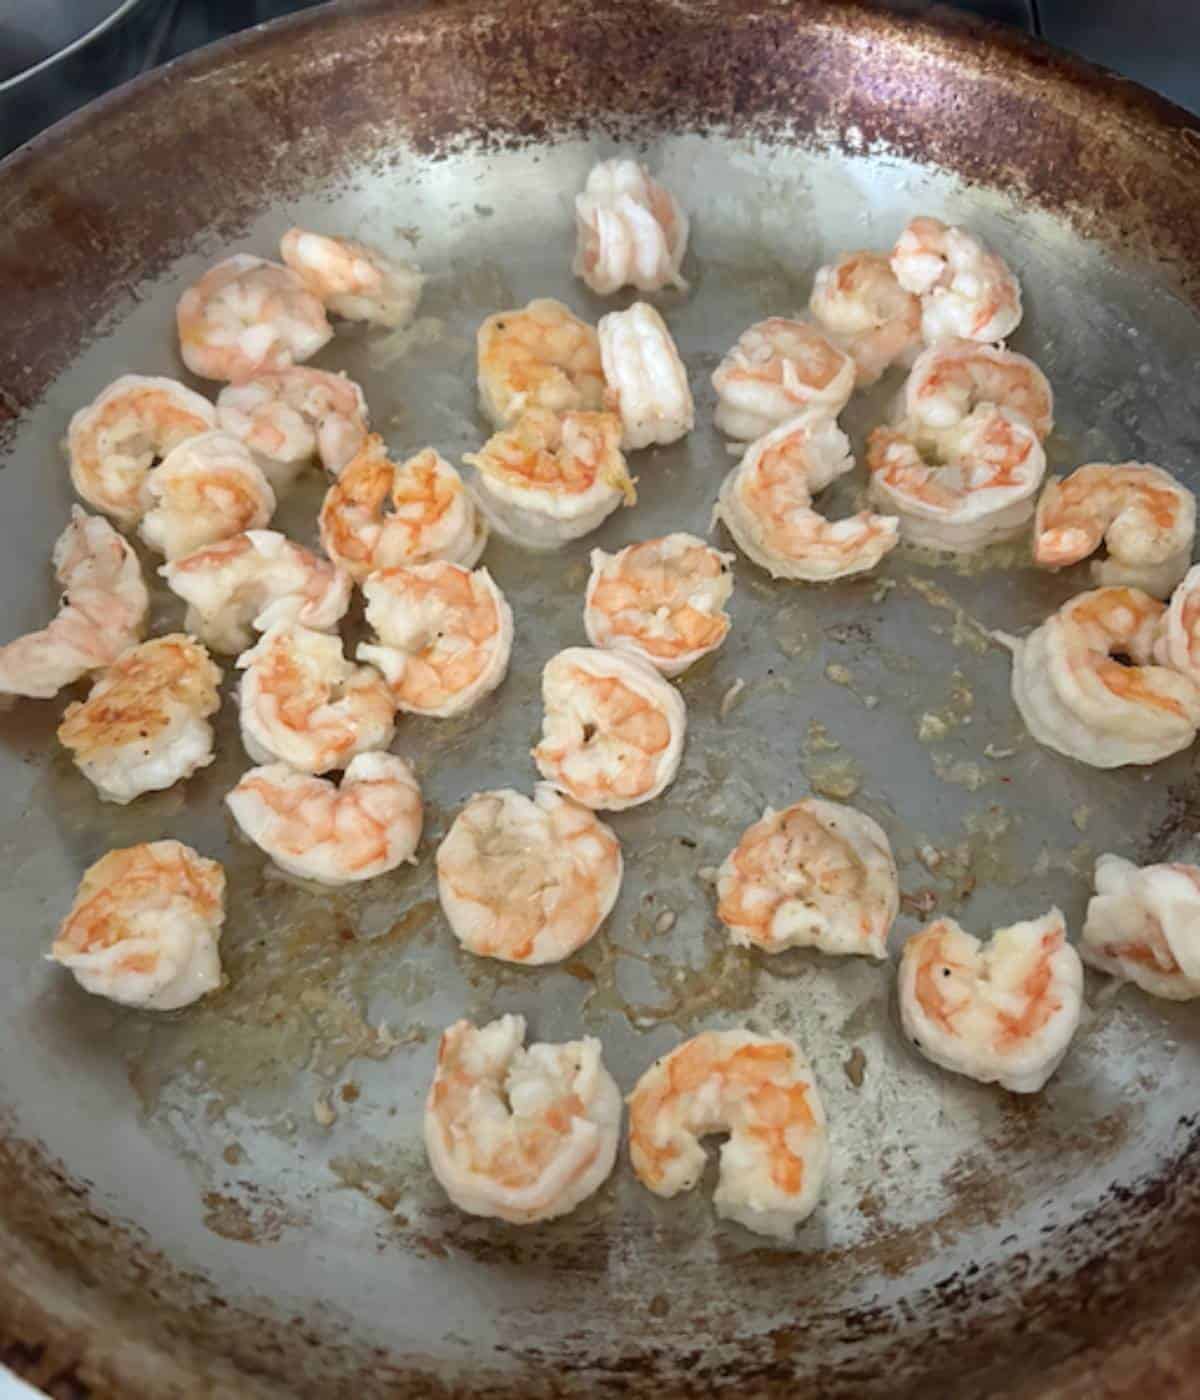 Shrimp cooking in stainless steel pan.